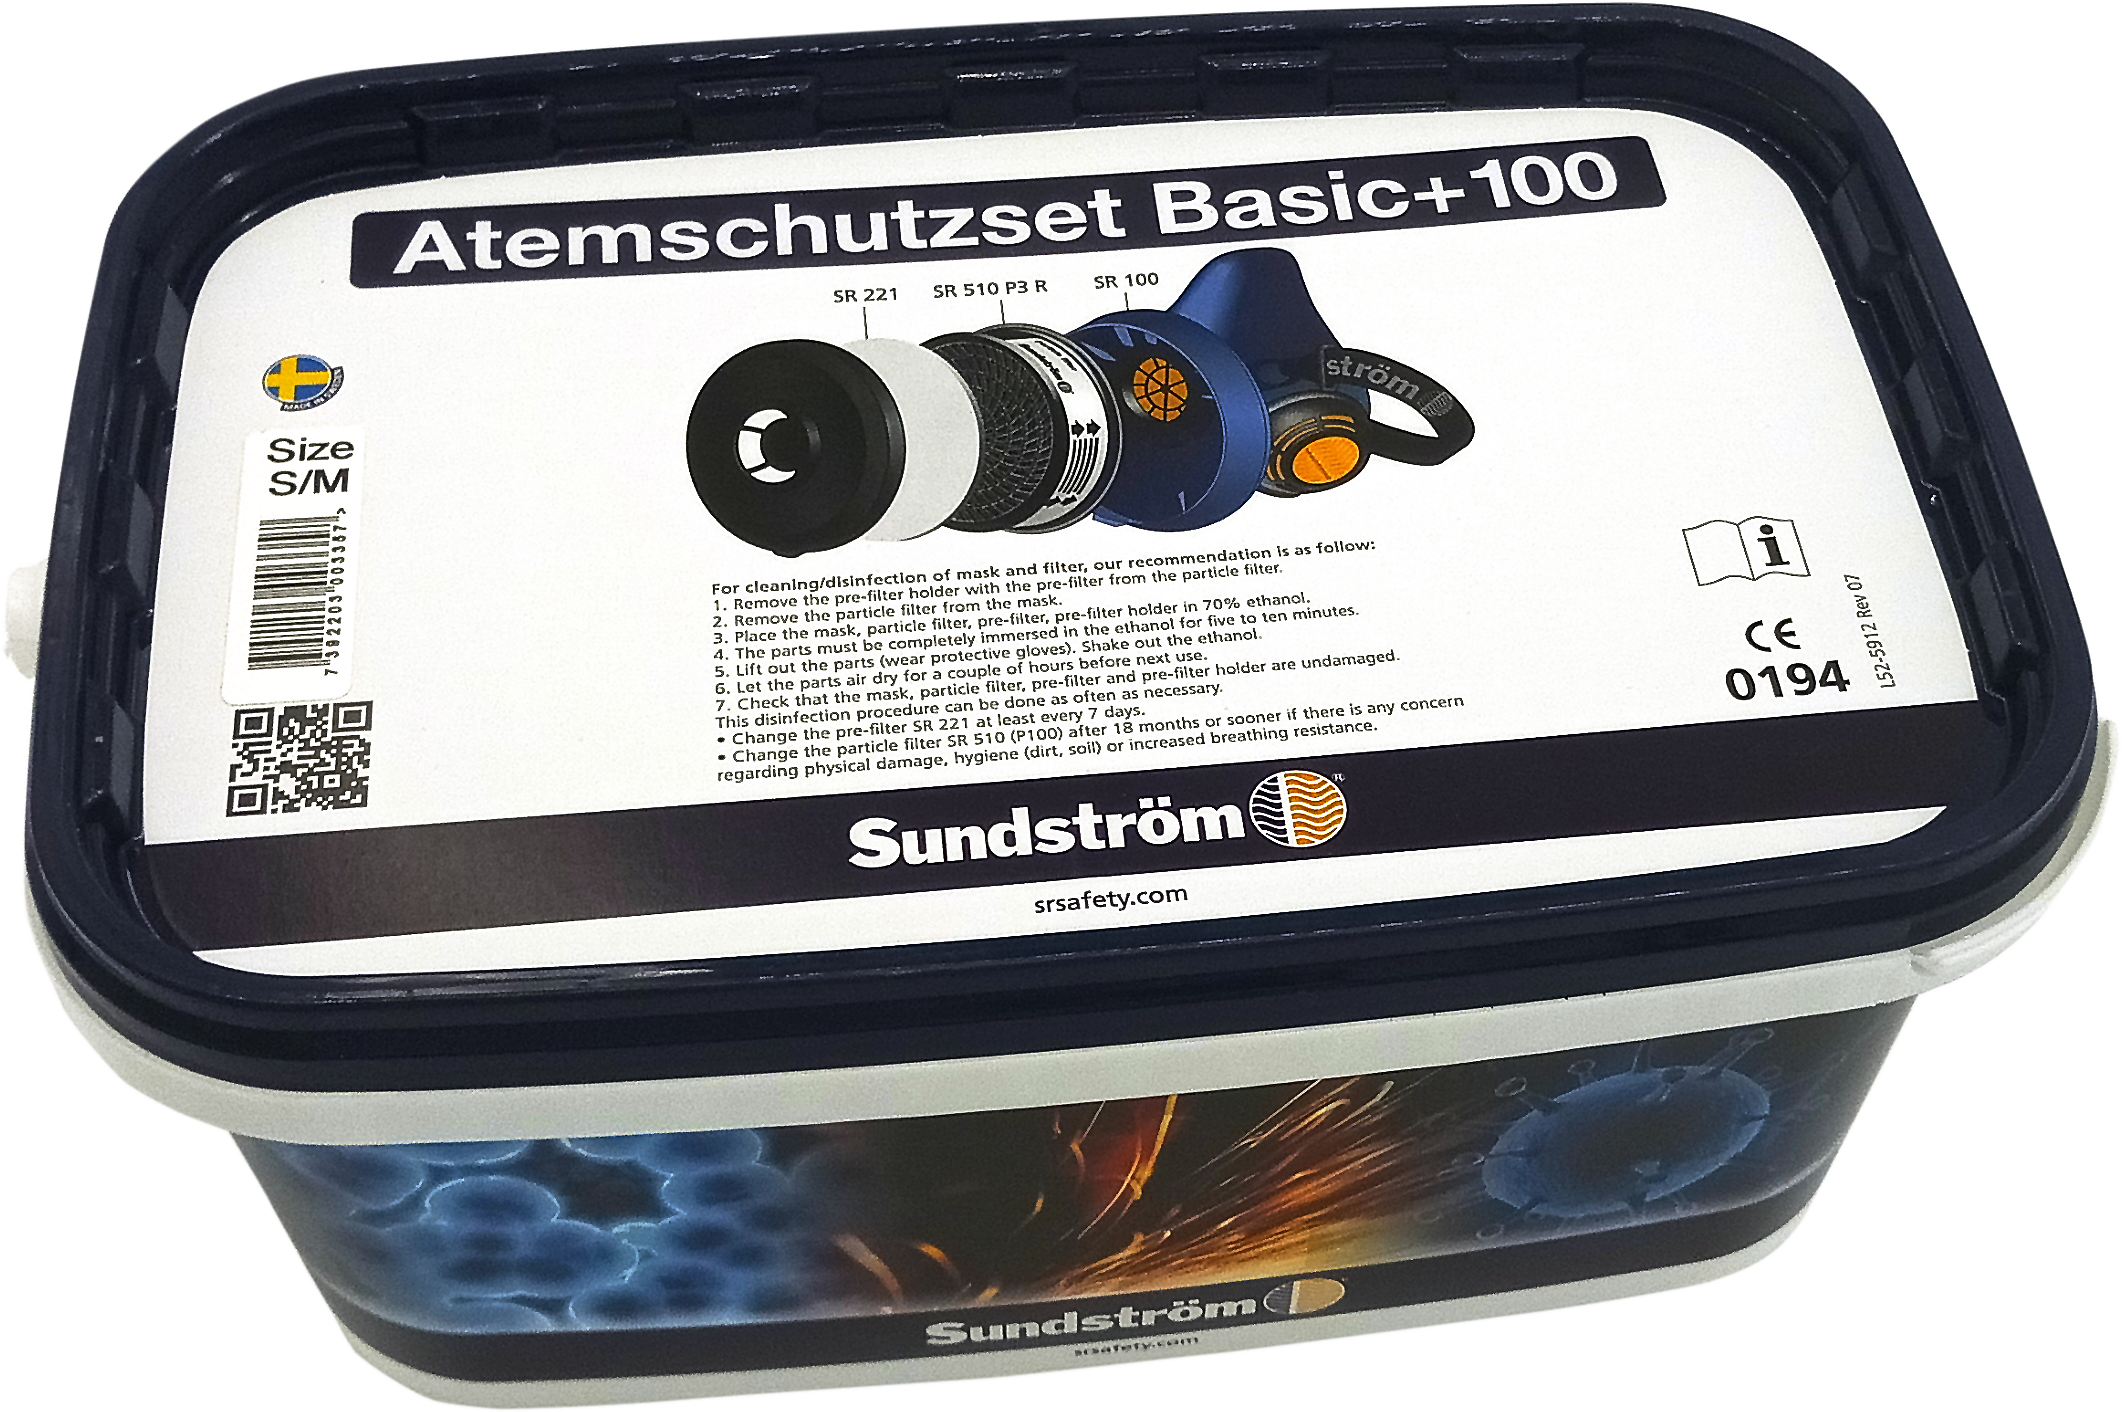 Sundström SR100, S/M Atemschutzset Basic+100, Filter P3, 5x Vorfilter 